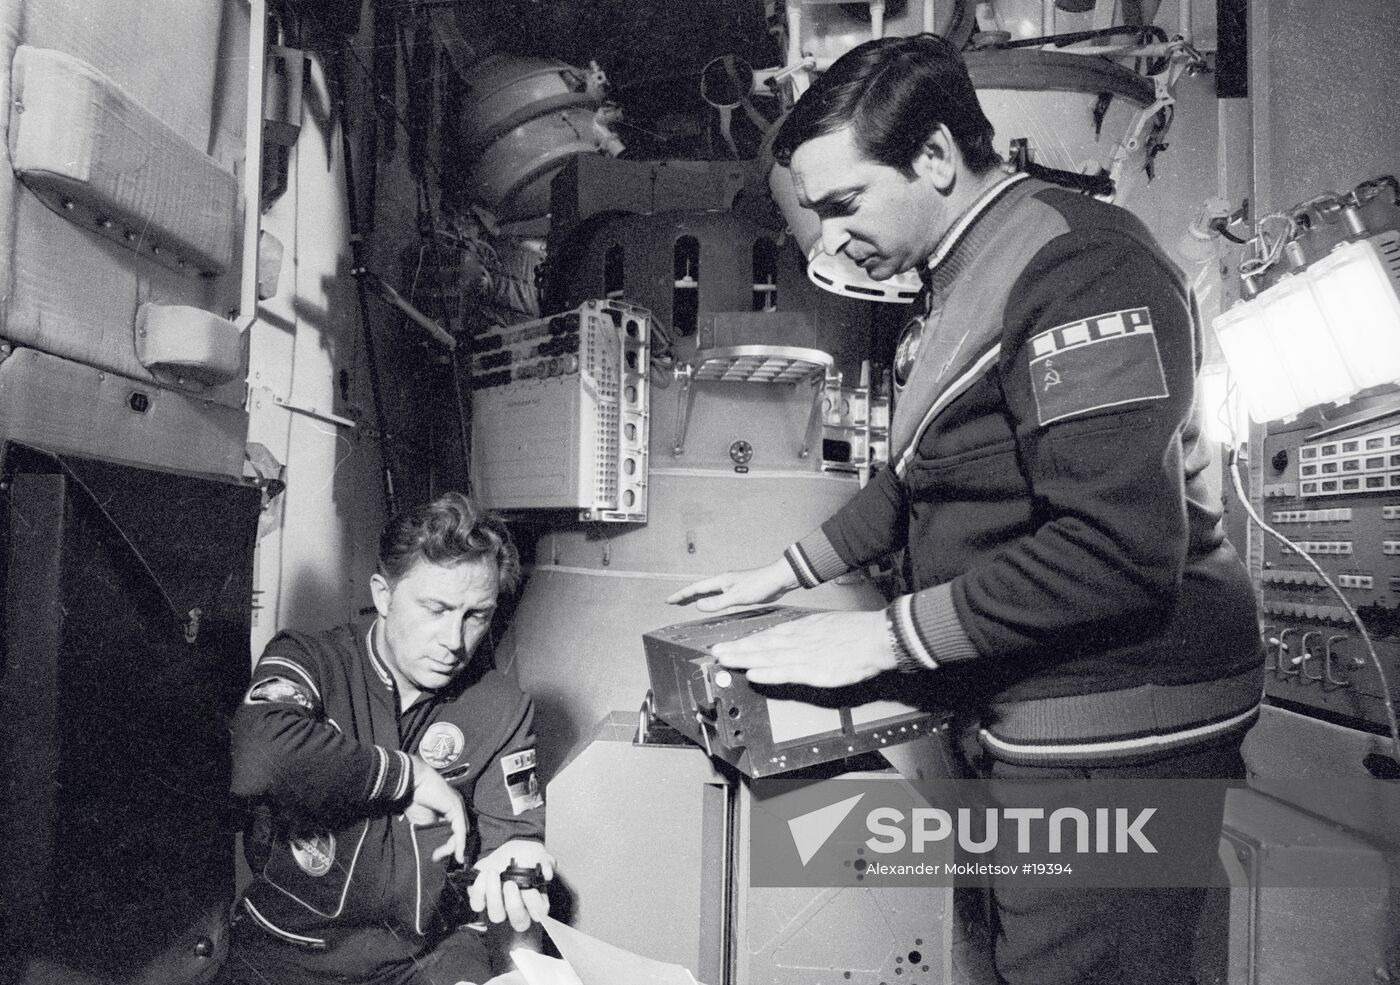 Cosmonauts Valery Bykovsky and Sigmund Jahn